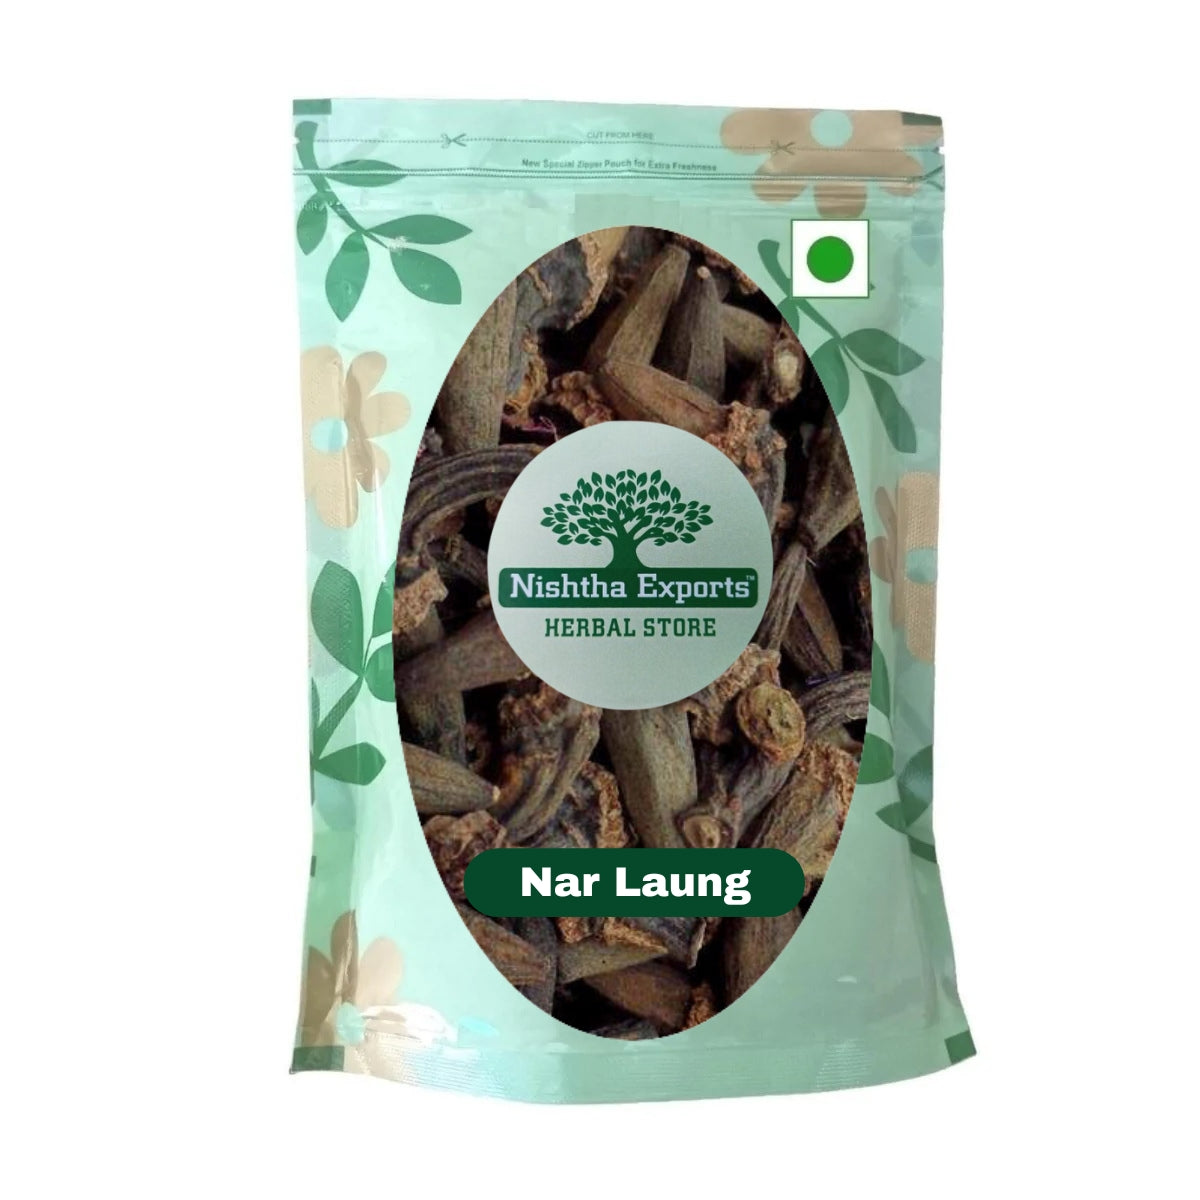 Nar Laung-Narlong-नर लौंग-Raw Herbs-Narlaung-Jadi Booti-Single Herbs